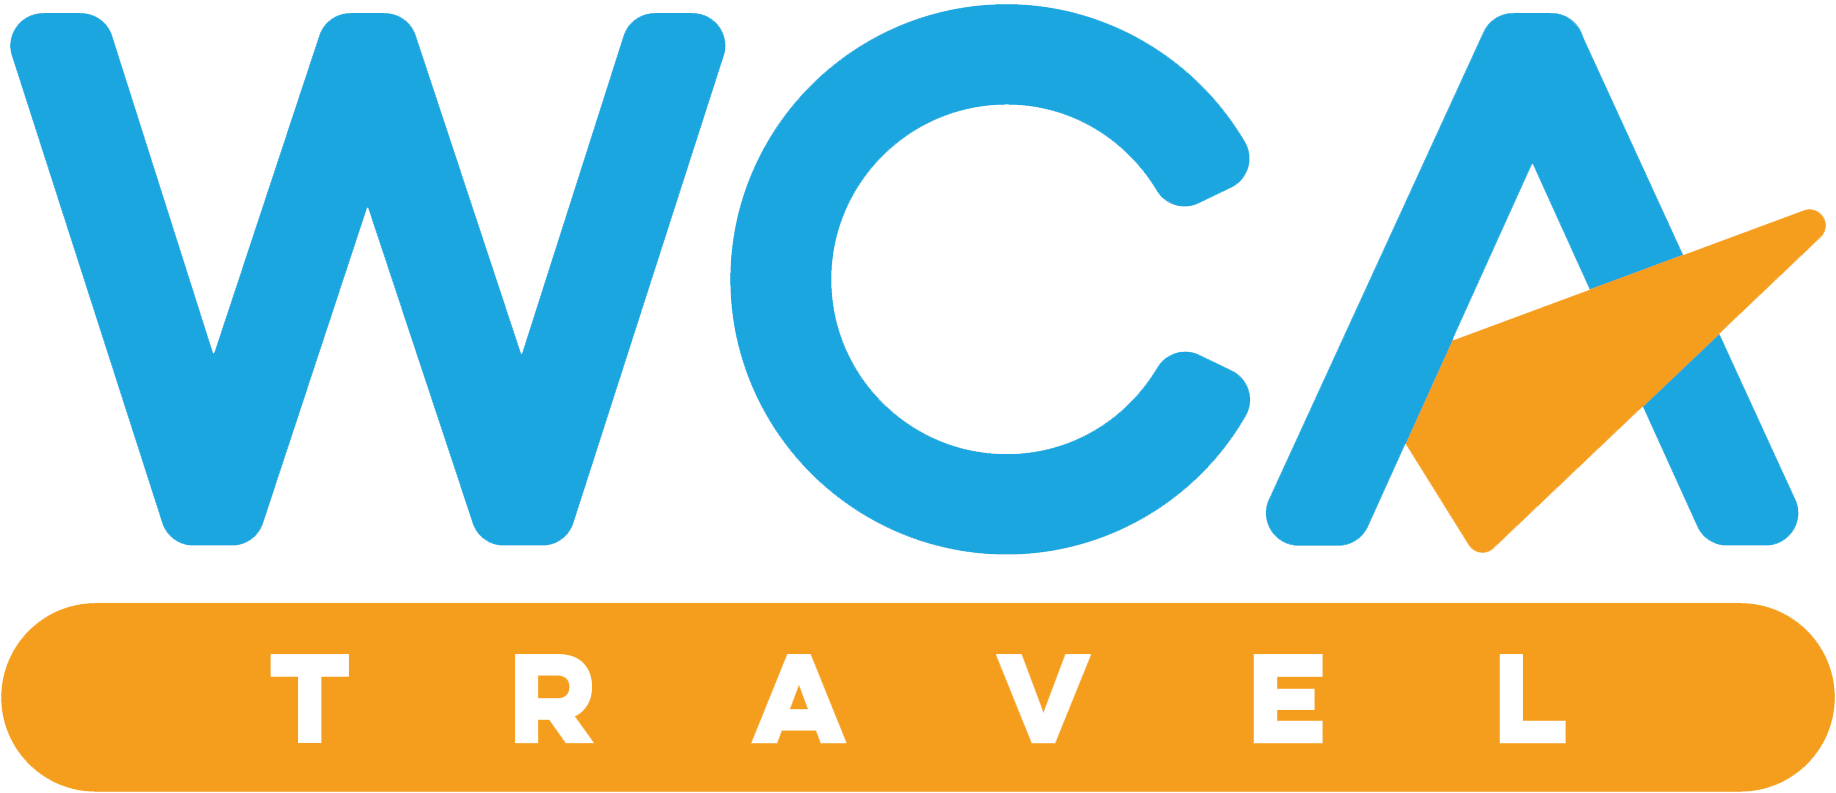 wca travel logo